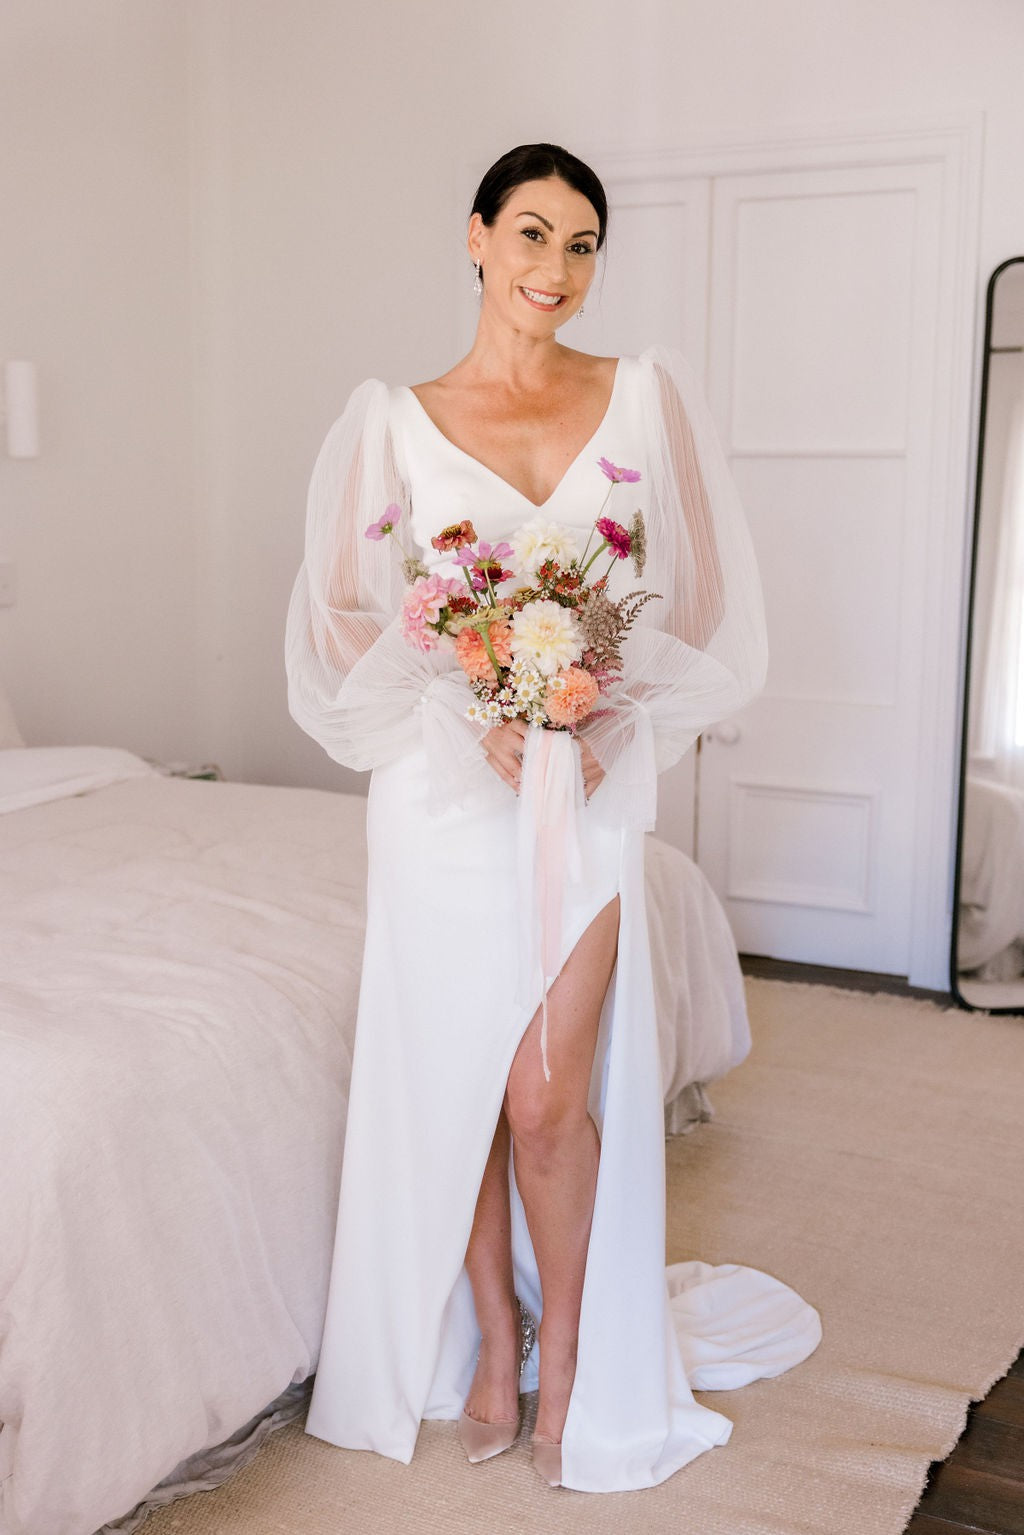 Sirene Elegant Long Puffy Sleeve High Side Silt Stain Wedding Dress Simple V-Neck Backless Sequin Floor Length Tulle Bridal Gown